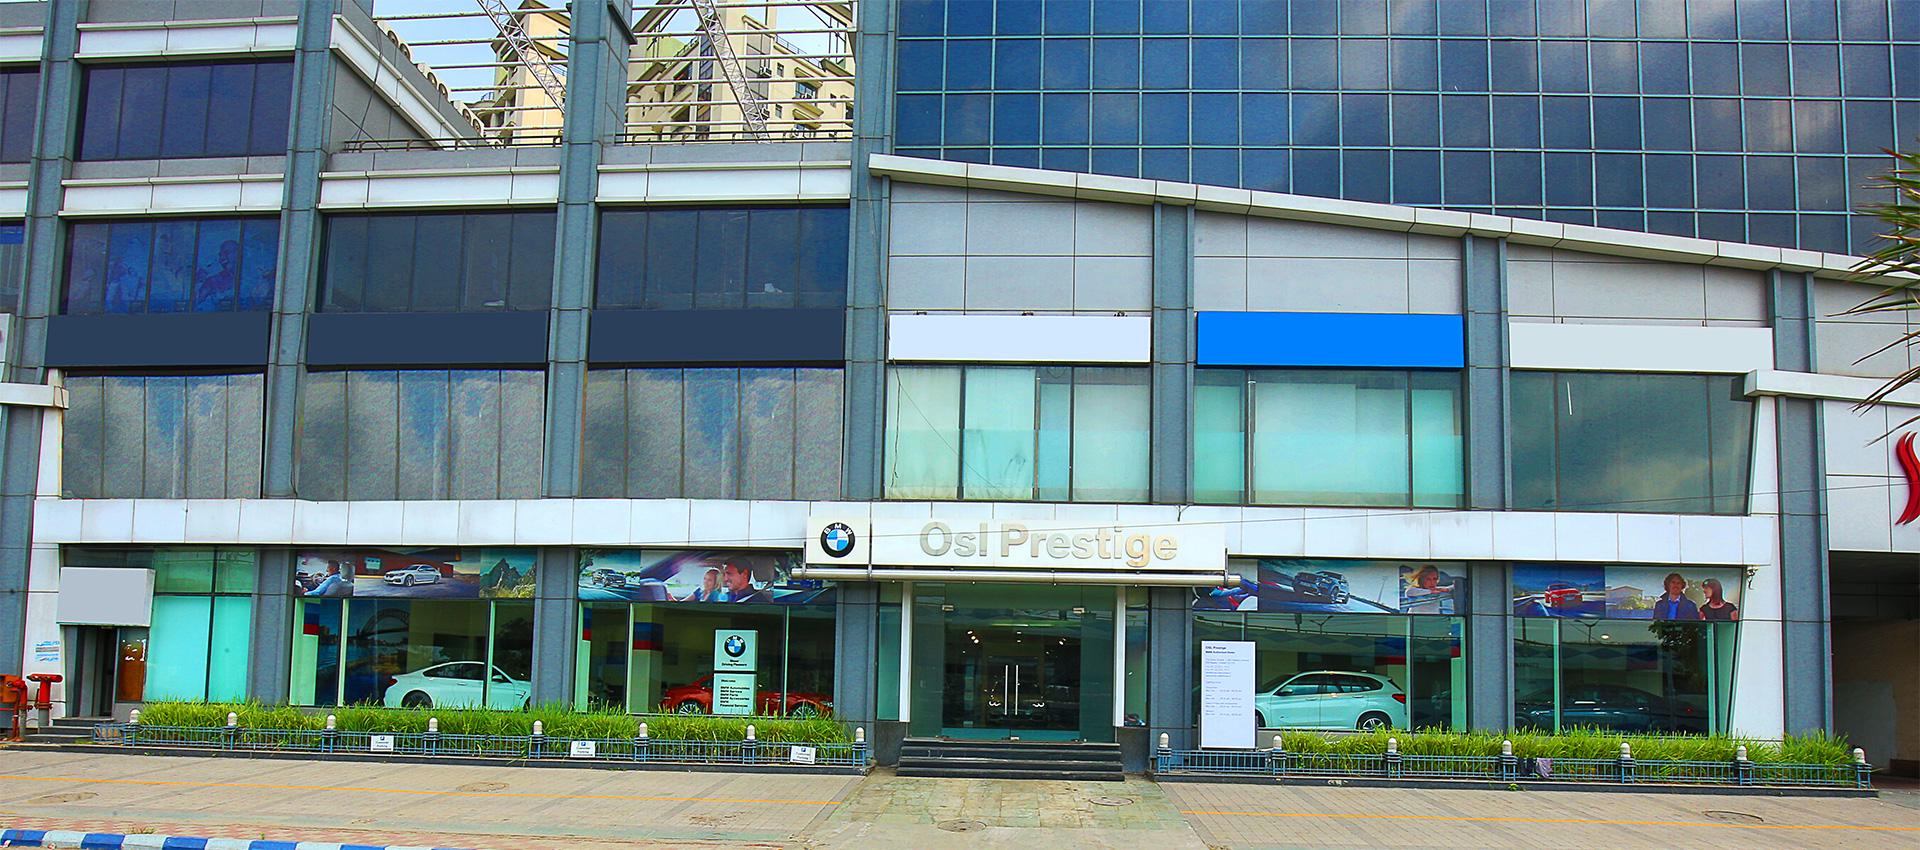 Contact Osl Prestige Kolkata Bhubaneswar Bmw Dealership Address